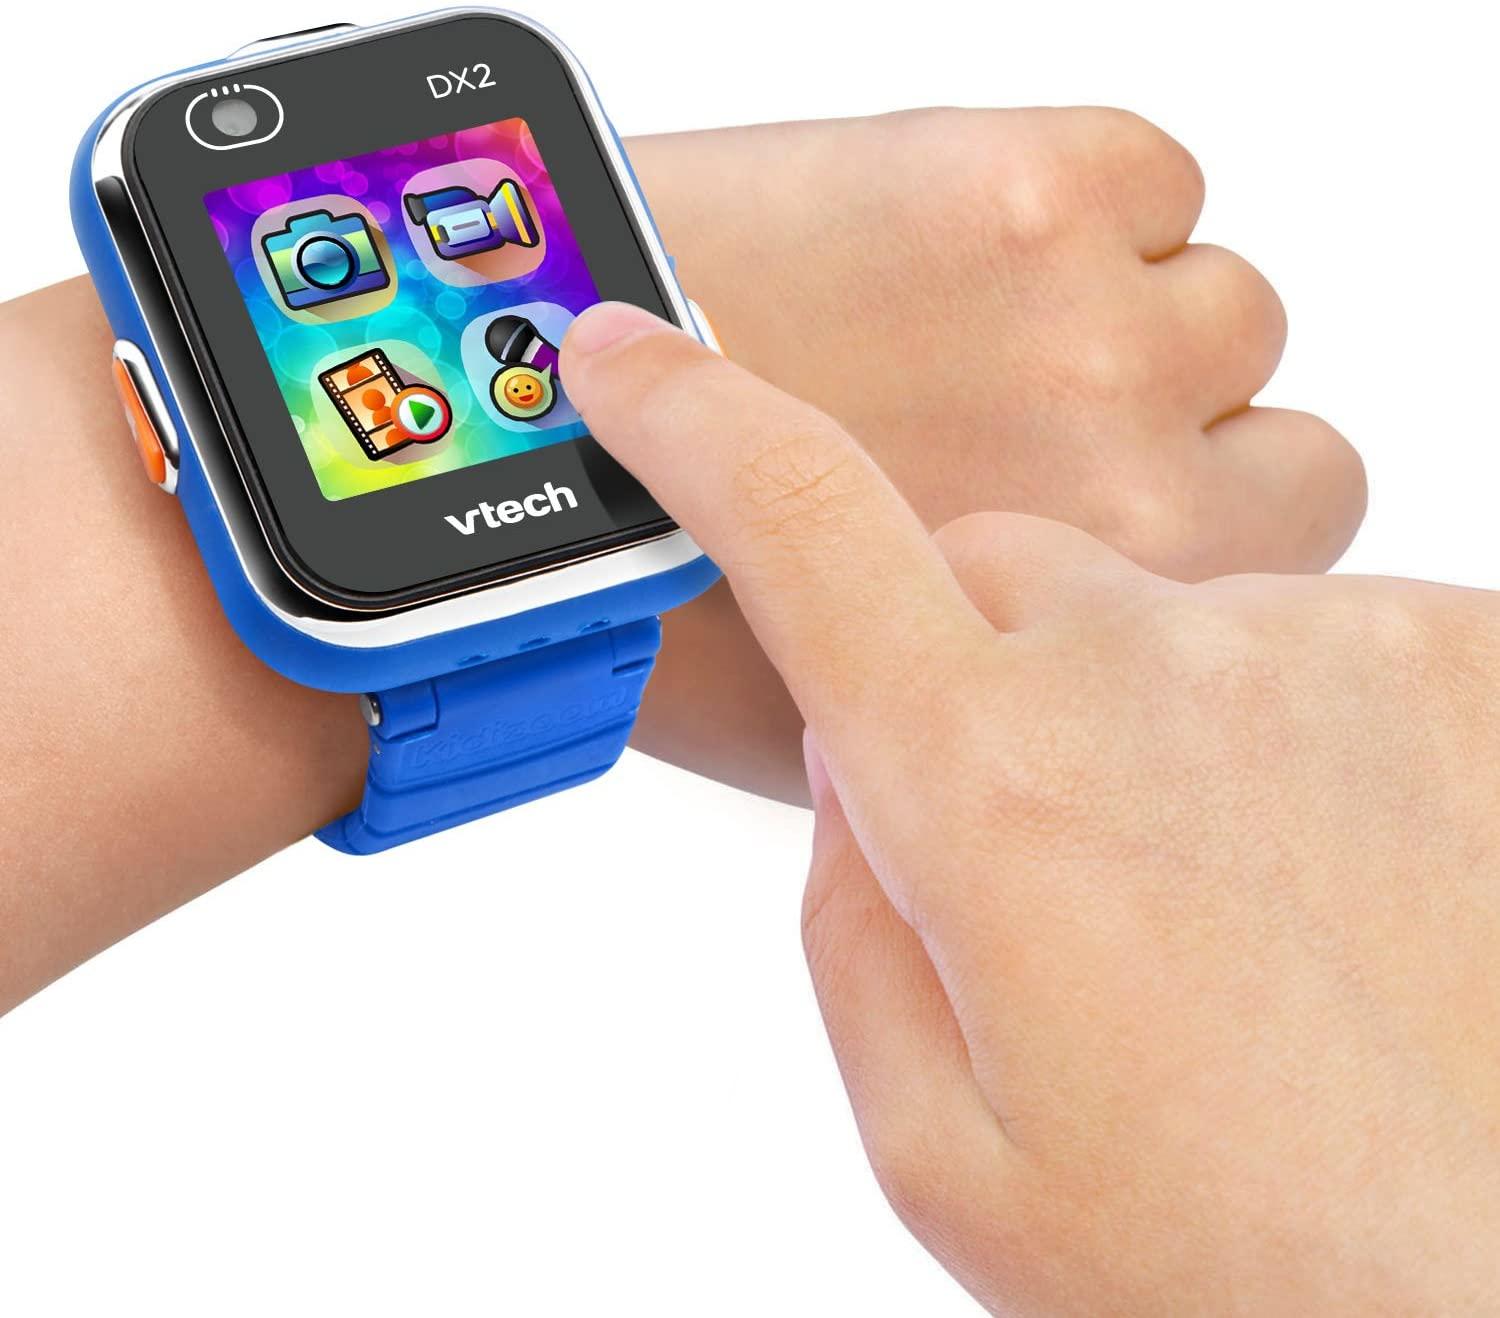 Vtech Kidizoom DX2 Smart Watch Blue Toymaster Ballina